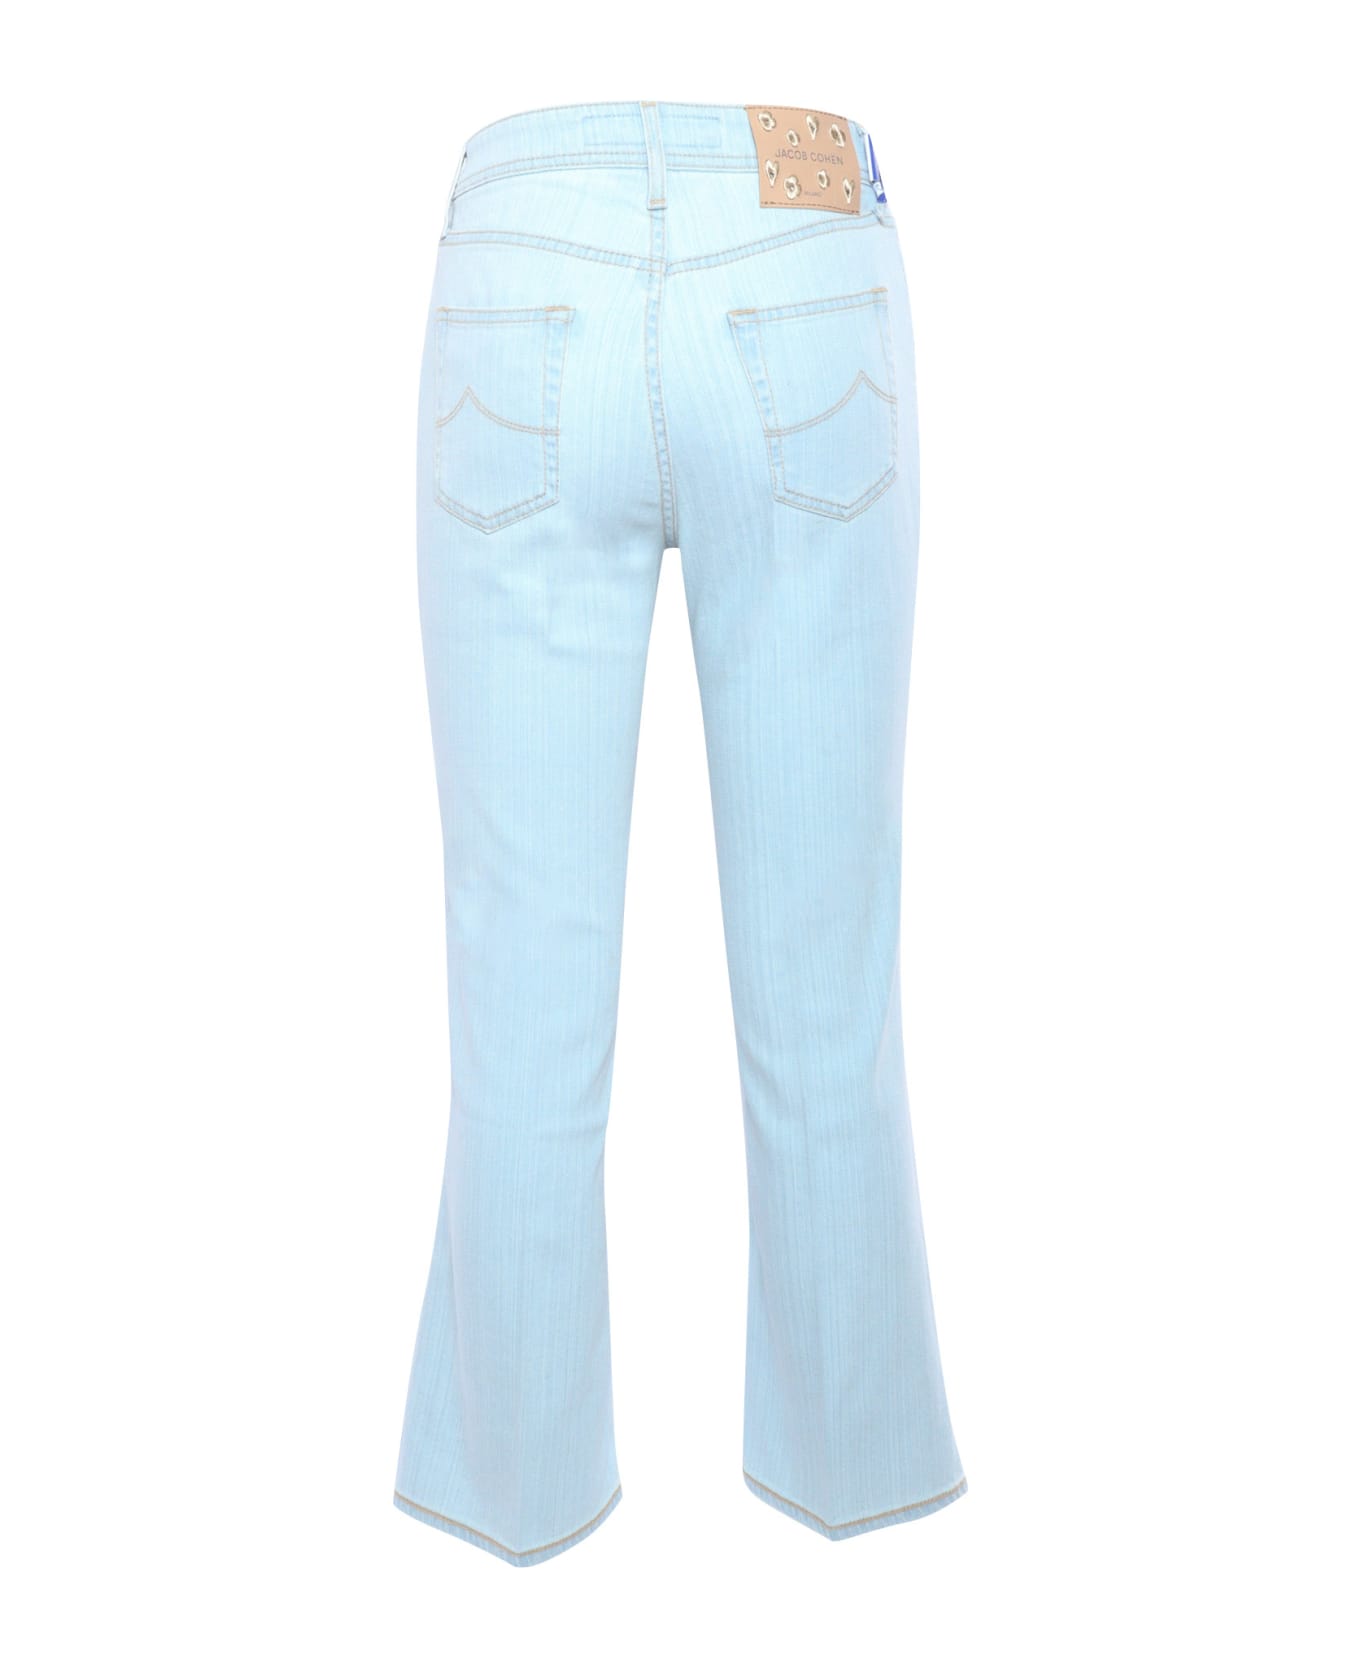 Jacob Cohen Light Blue 5 Pocket Jeans - LIGHT BLUE デニム